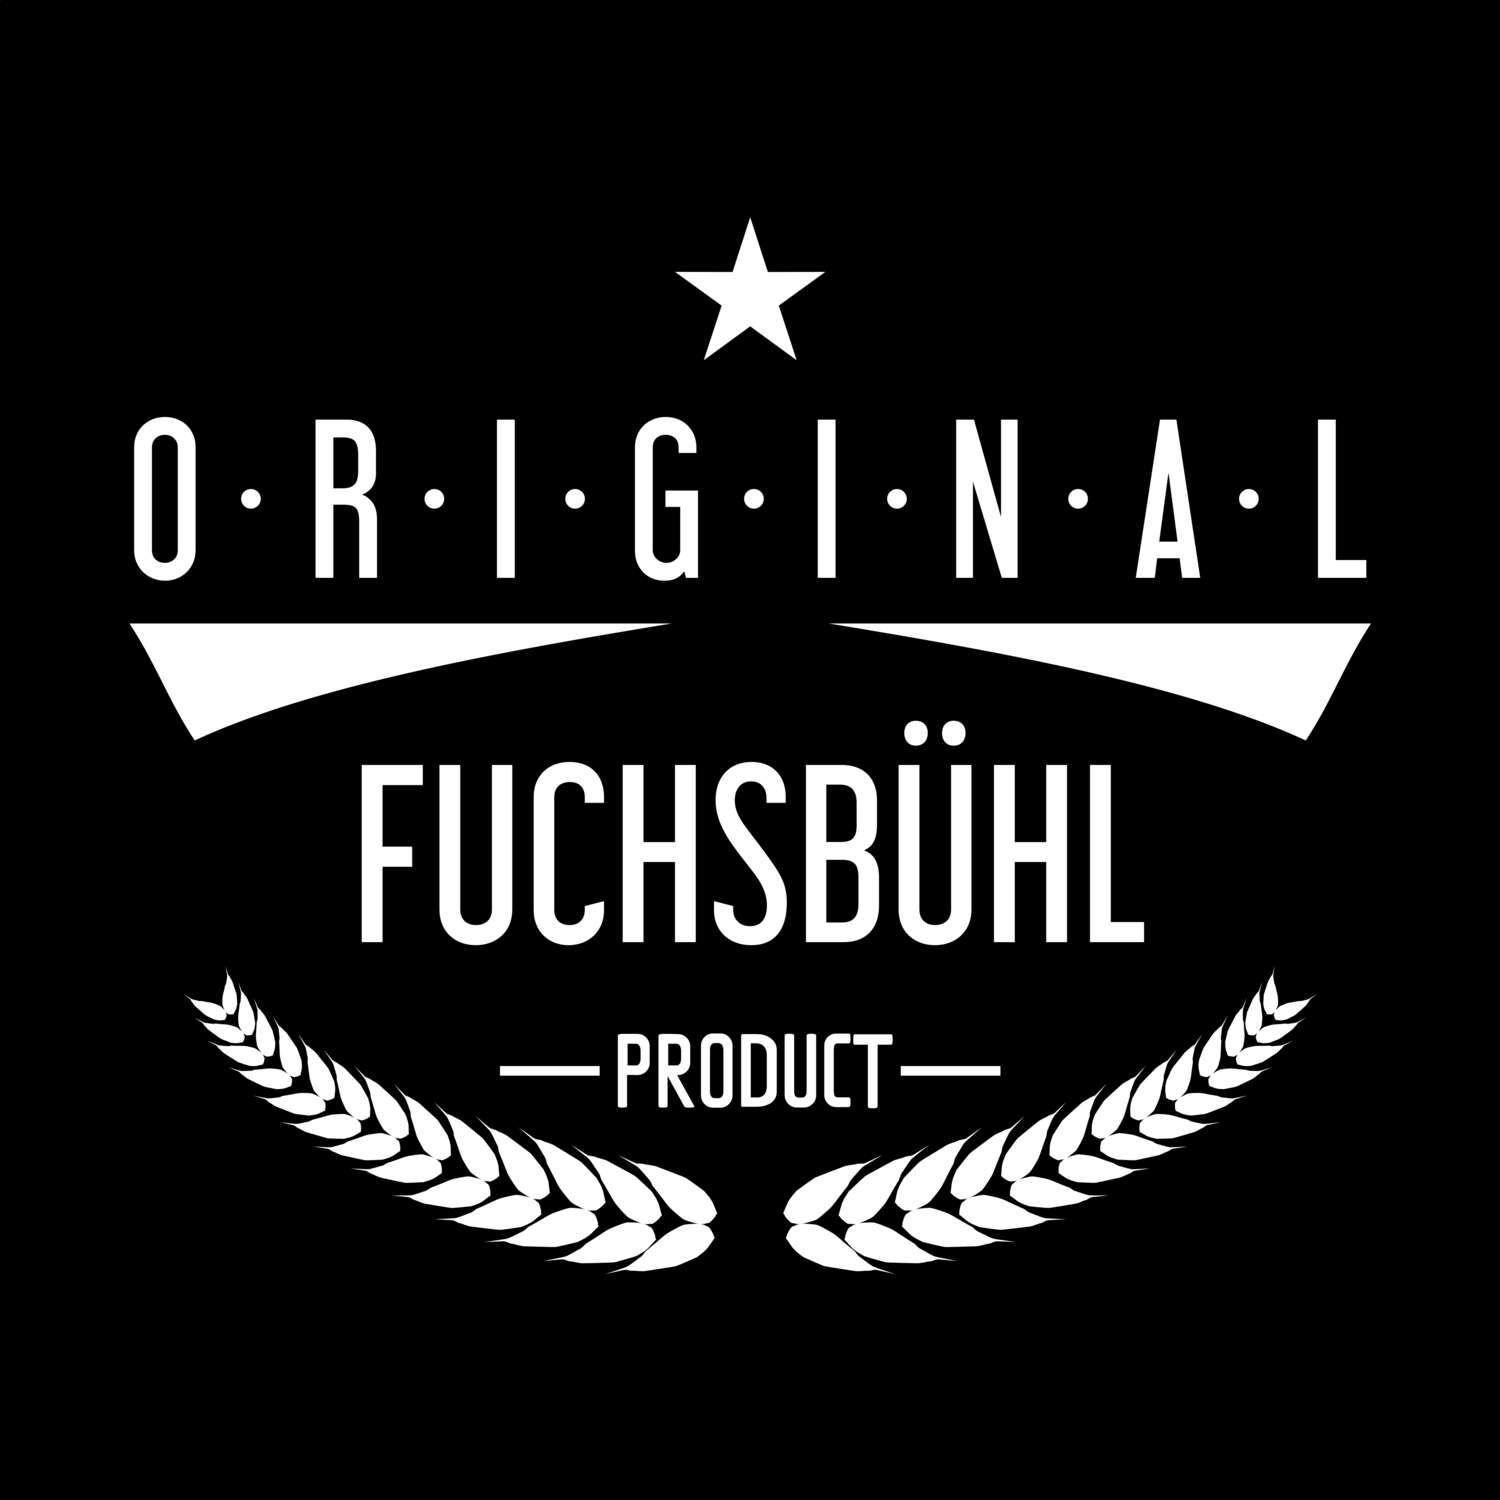 Fuchsbühl T-Shirt »Original Product«